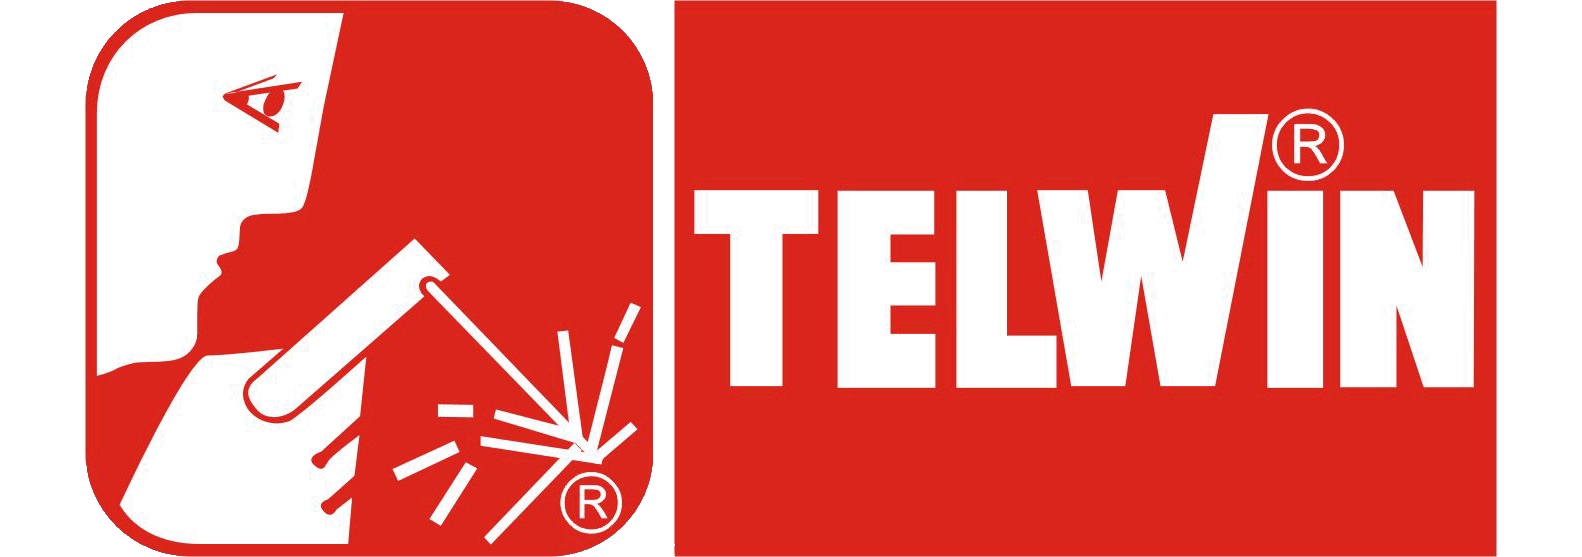 logo telwin